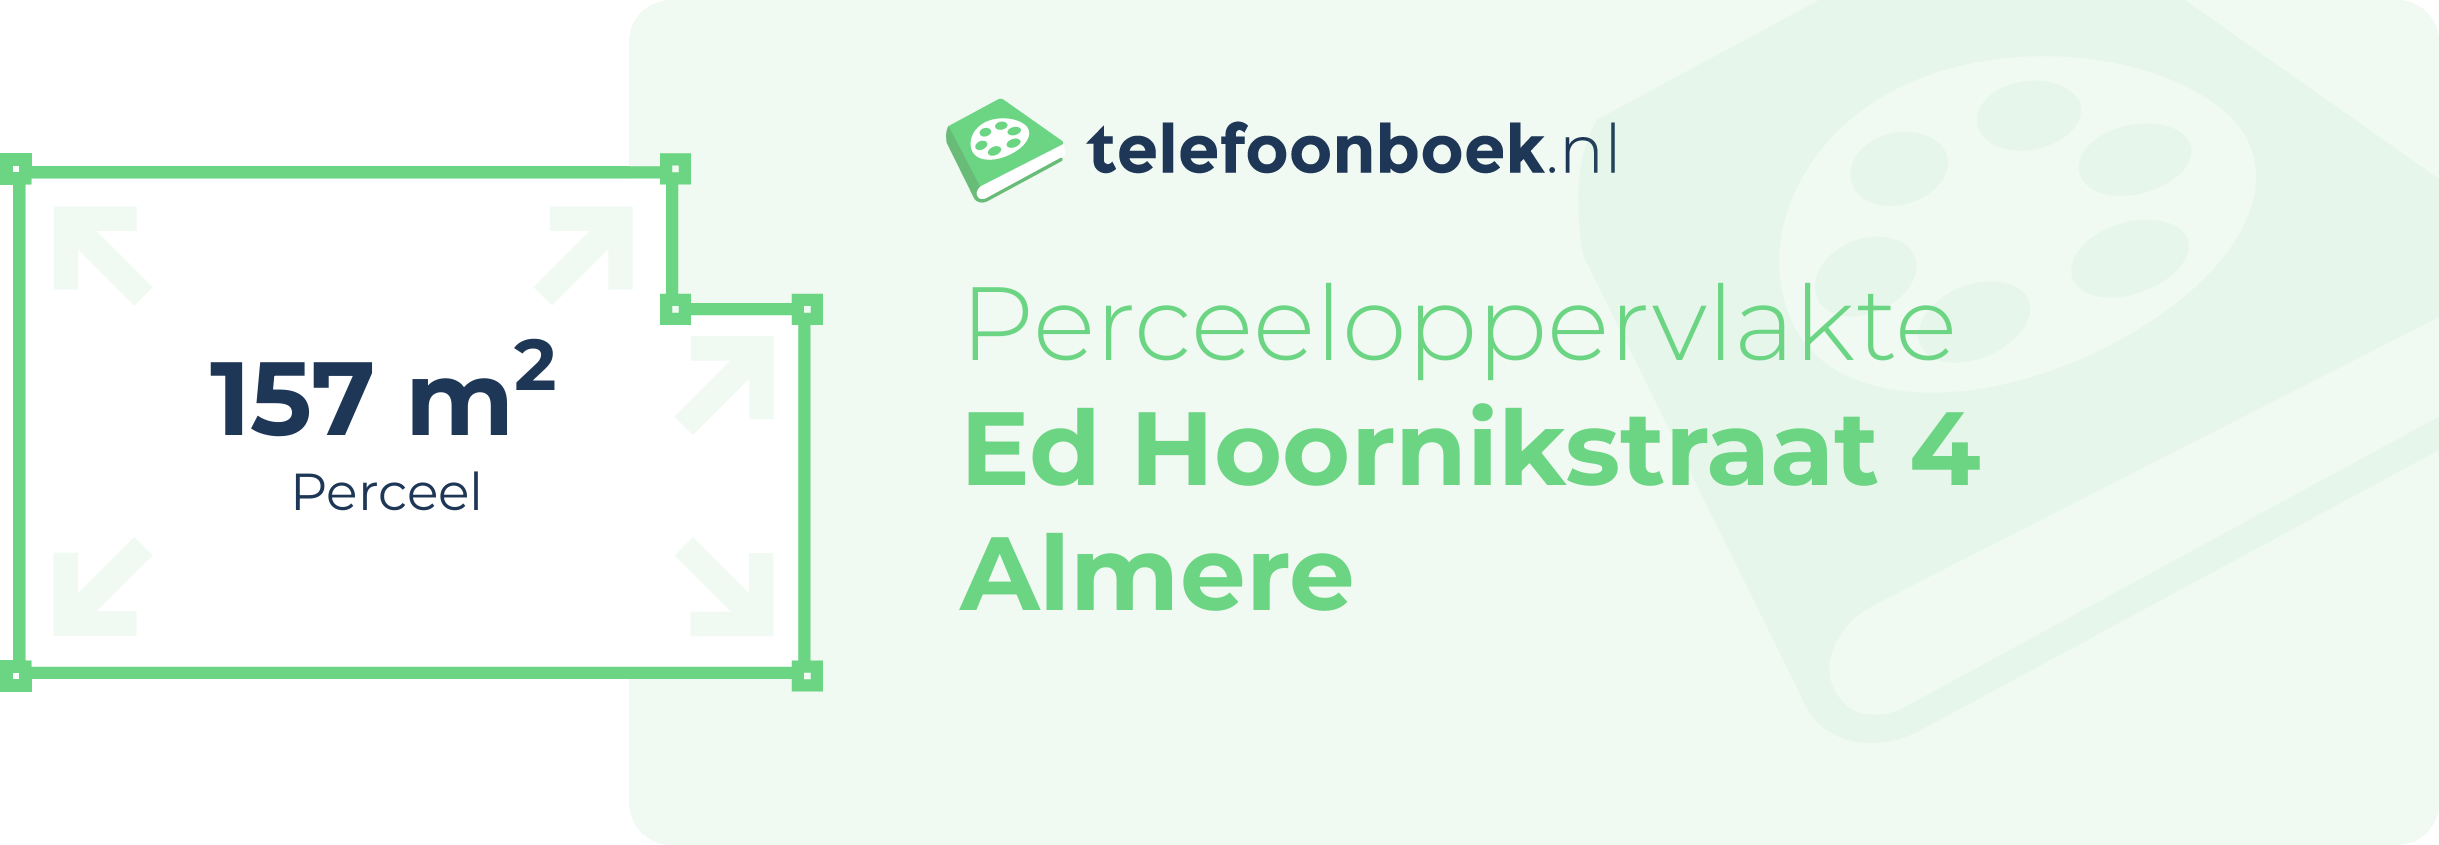 Perceeloppervlakte Ed Hoornikstraat 4 Almere